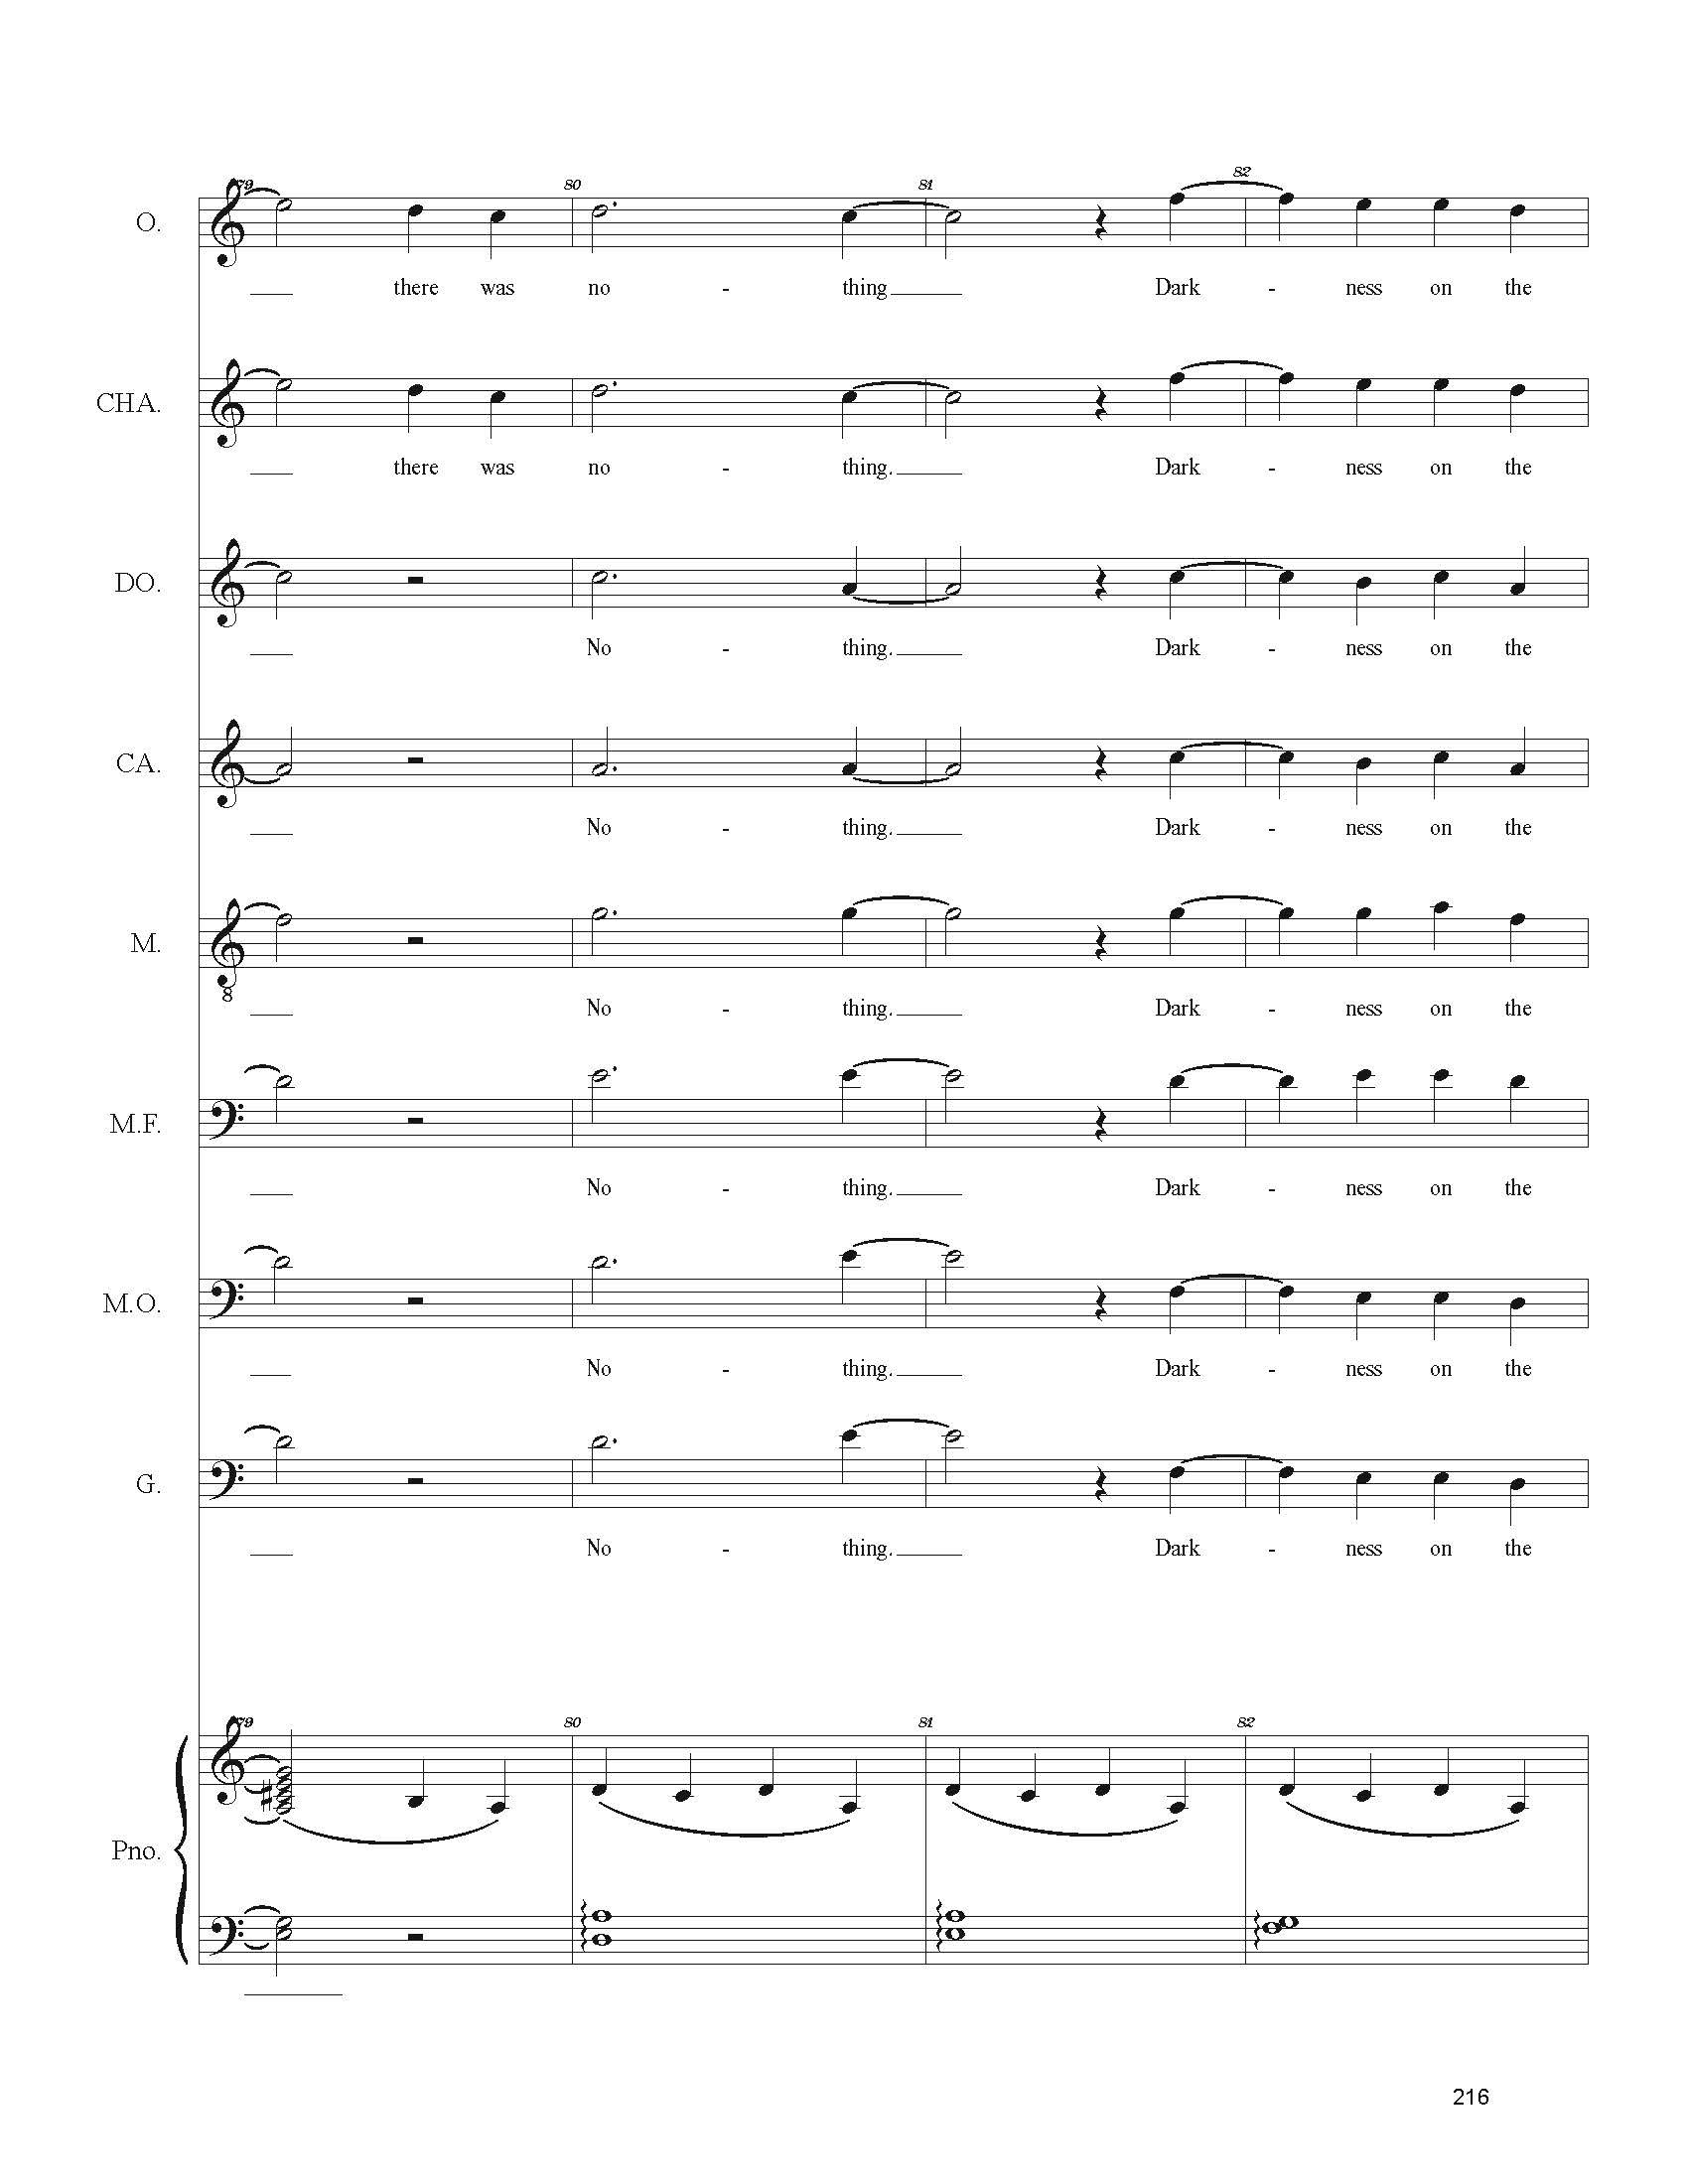 FULL PIANO VOCAL SCORE DRAFT 1 - Score_Page_216.jpg